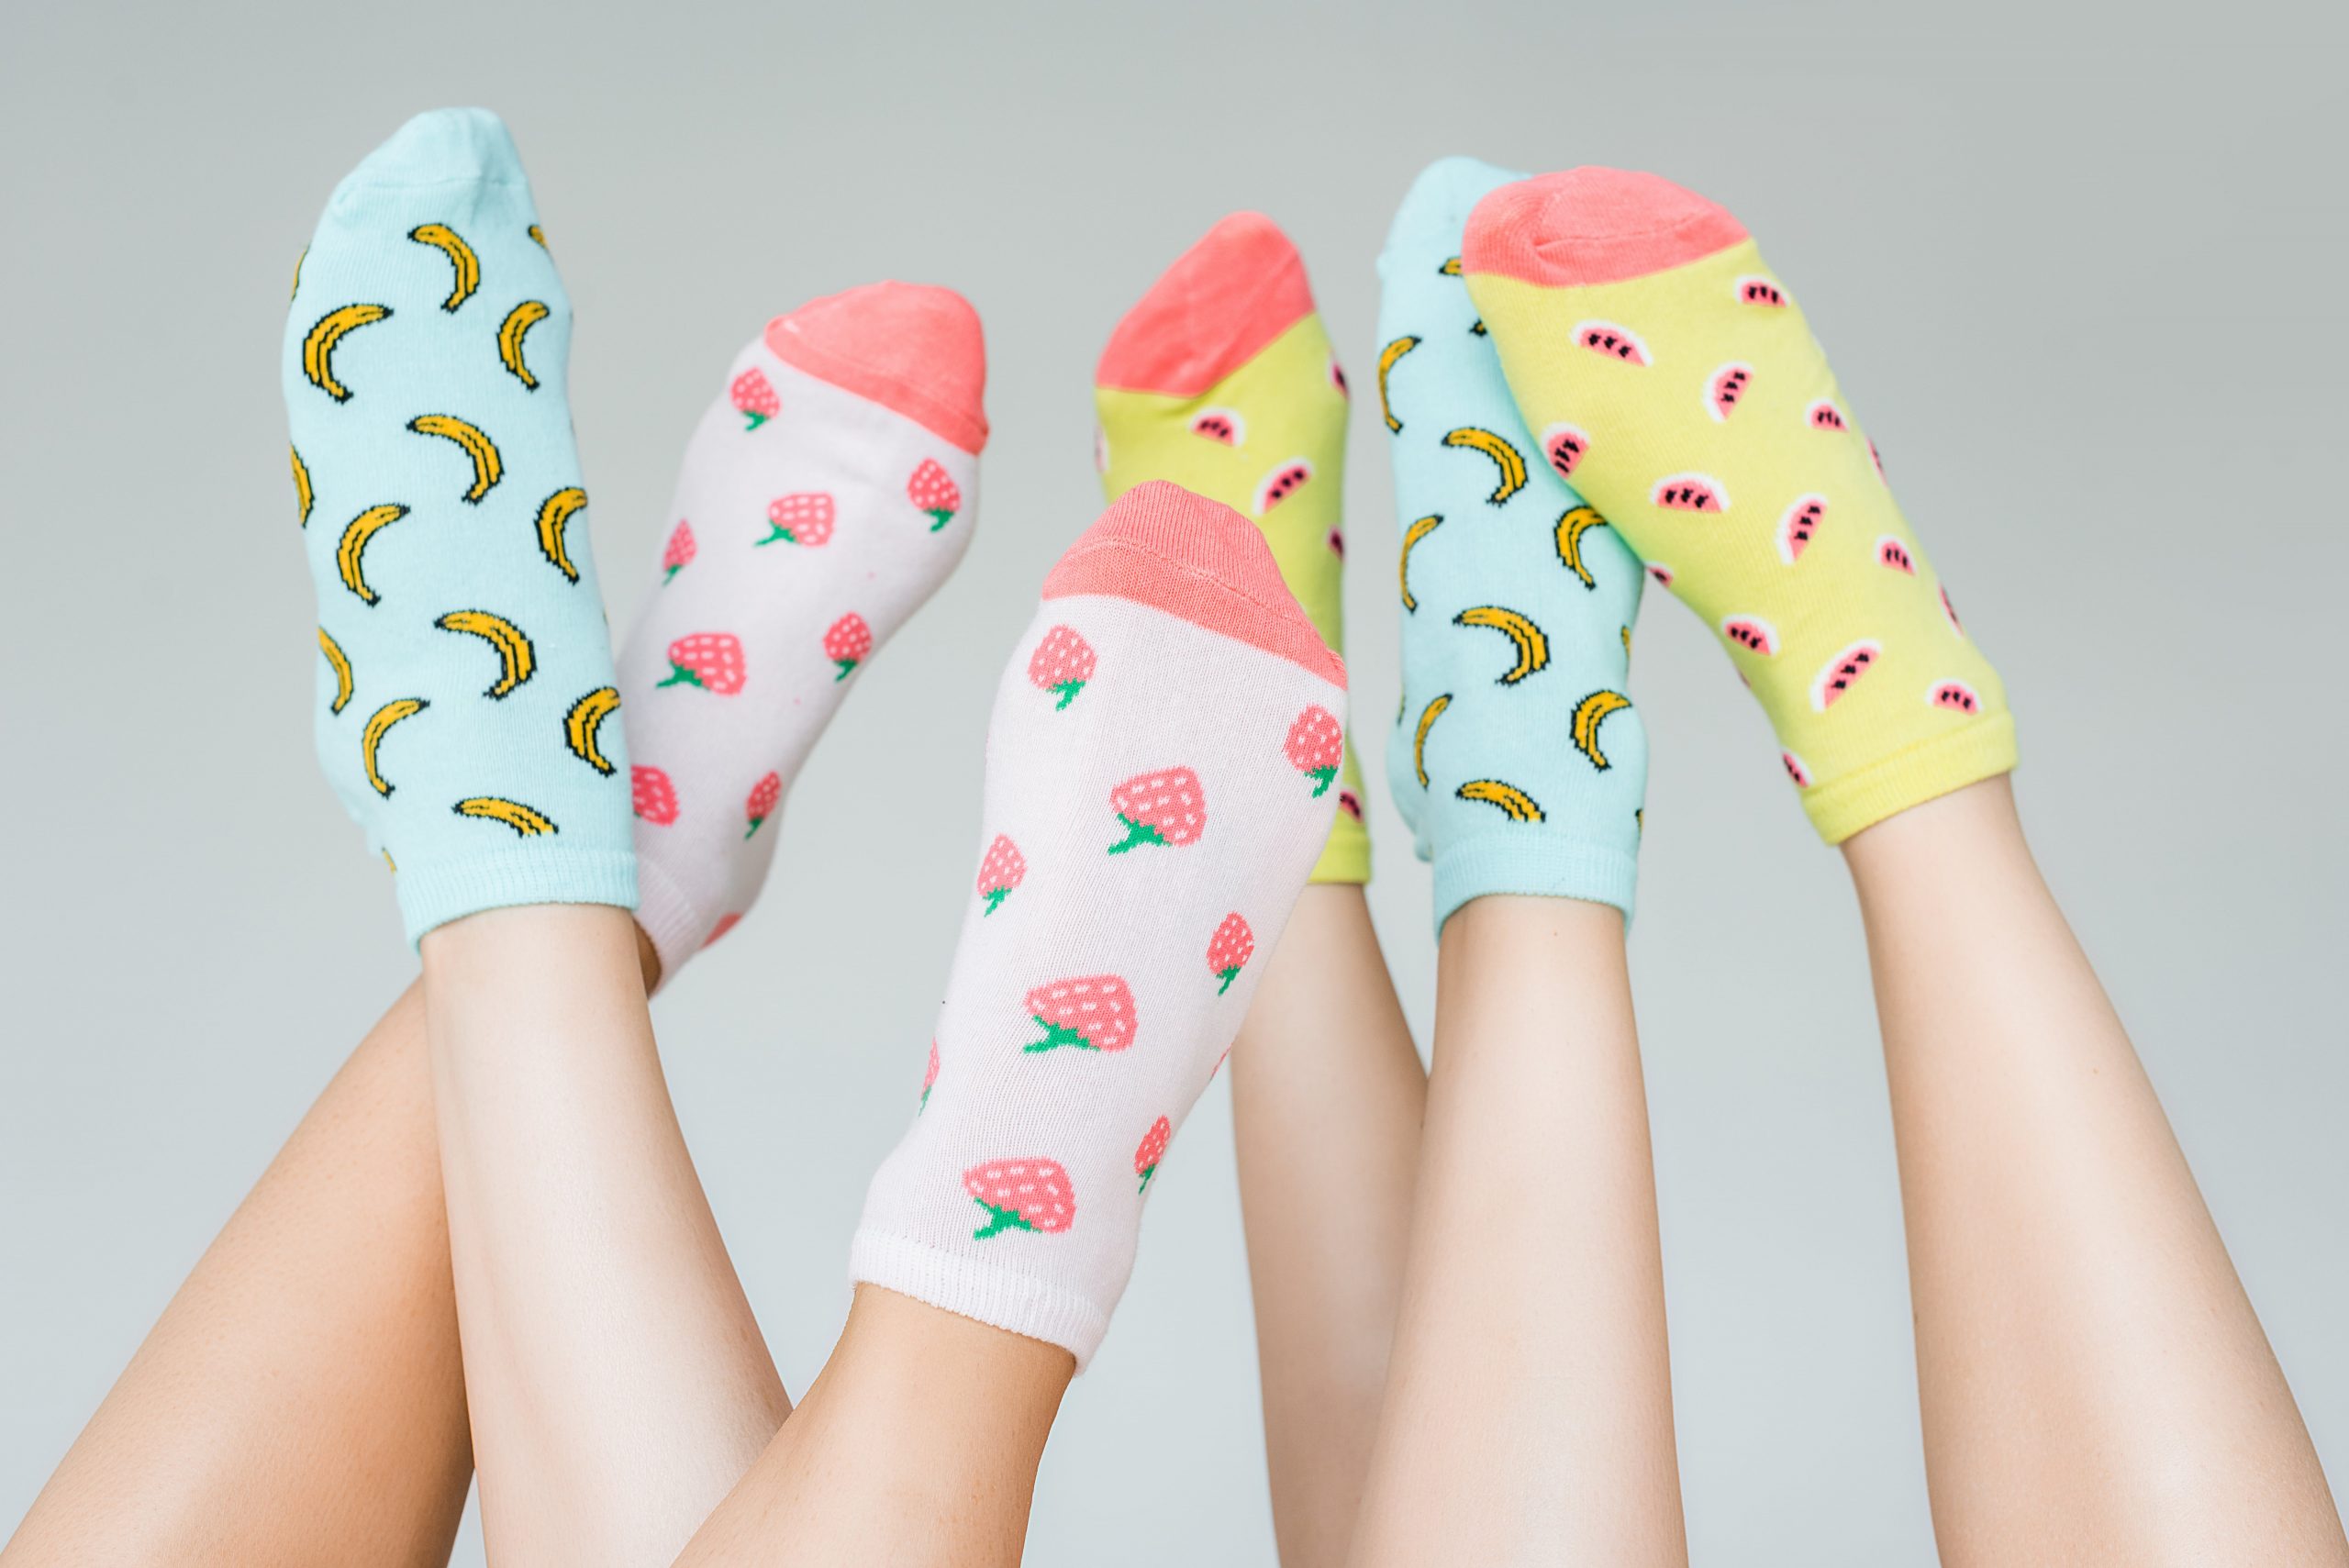 female feet in colorful fruity socks